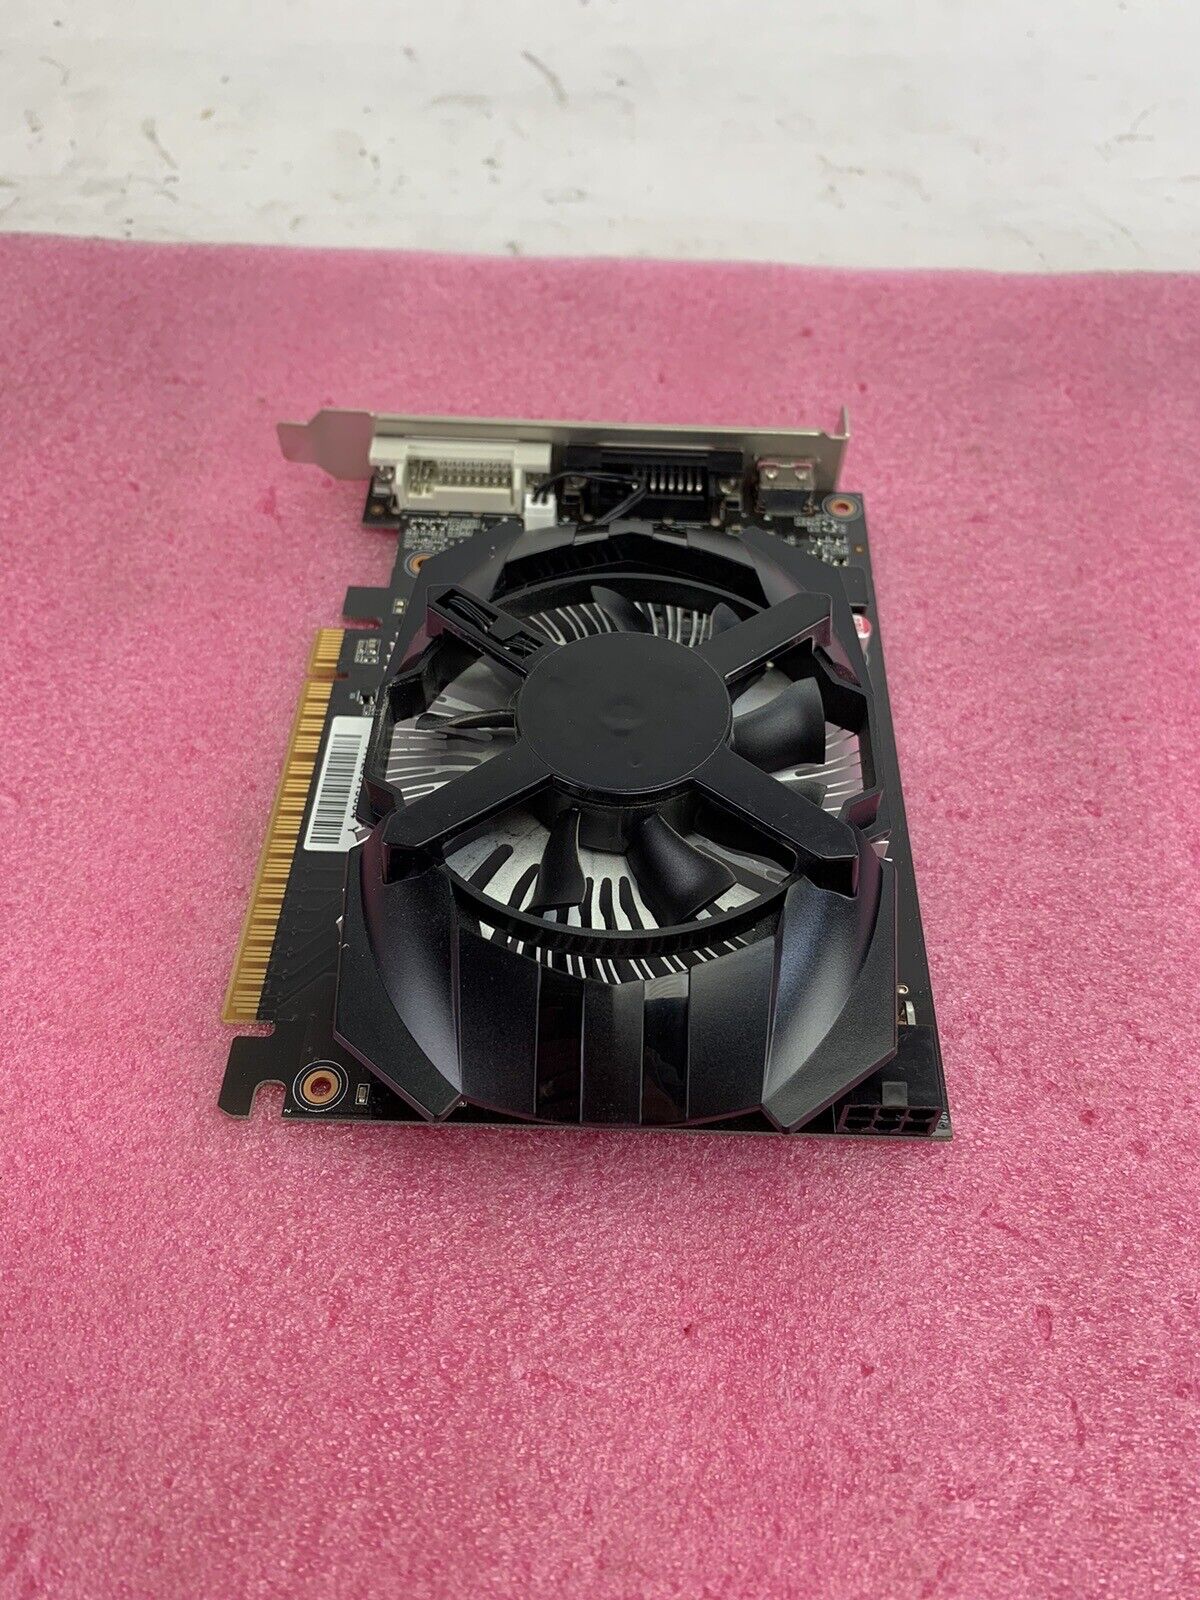 PNY GeForce GTX650 2048M GDDR5 PCIe Graphics Card